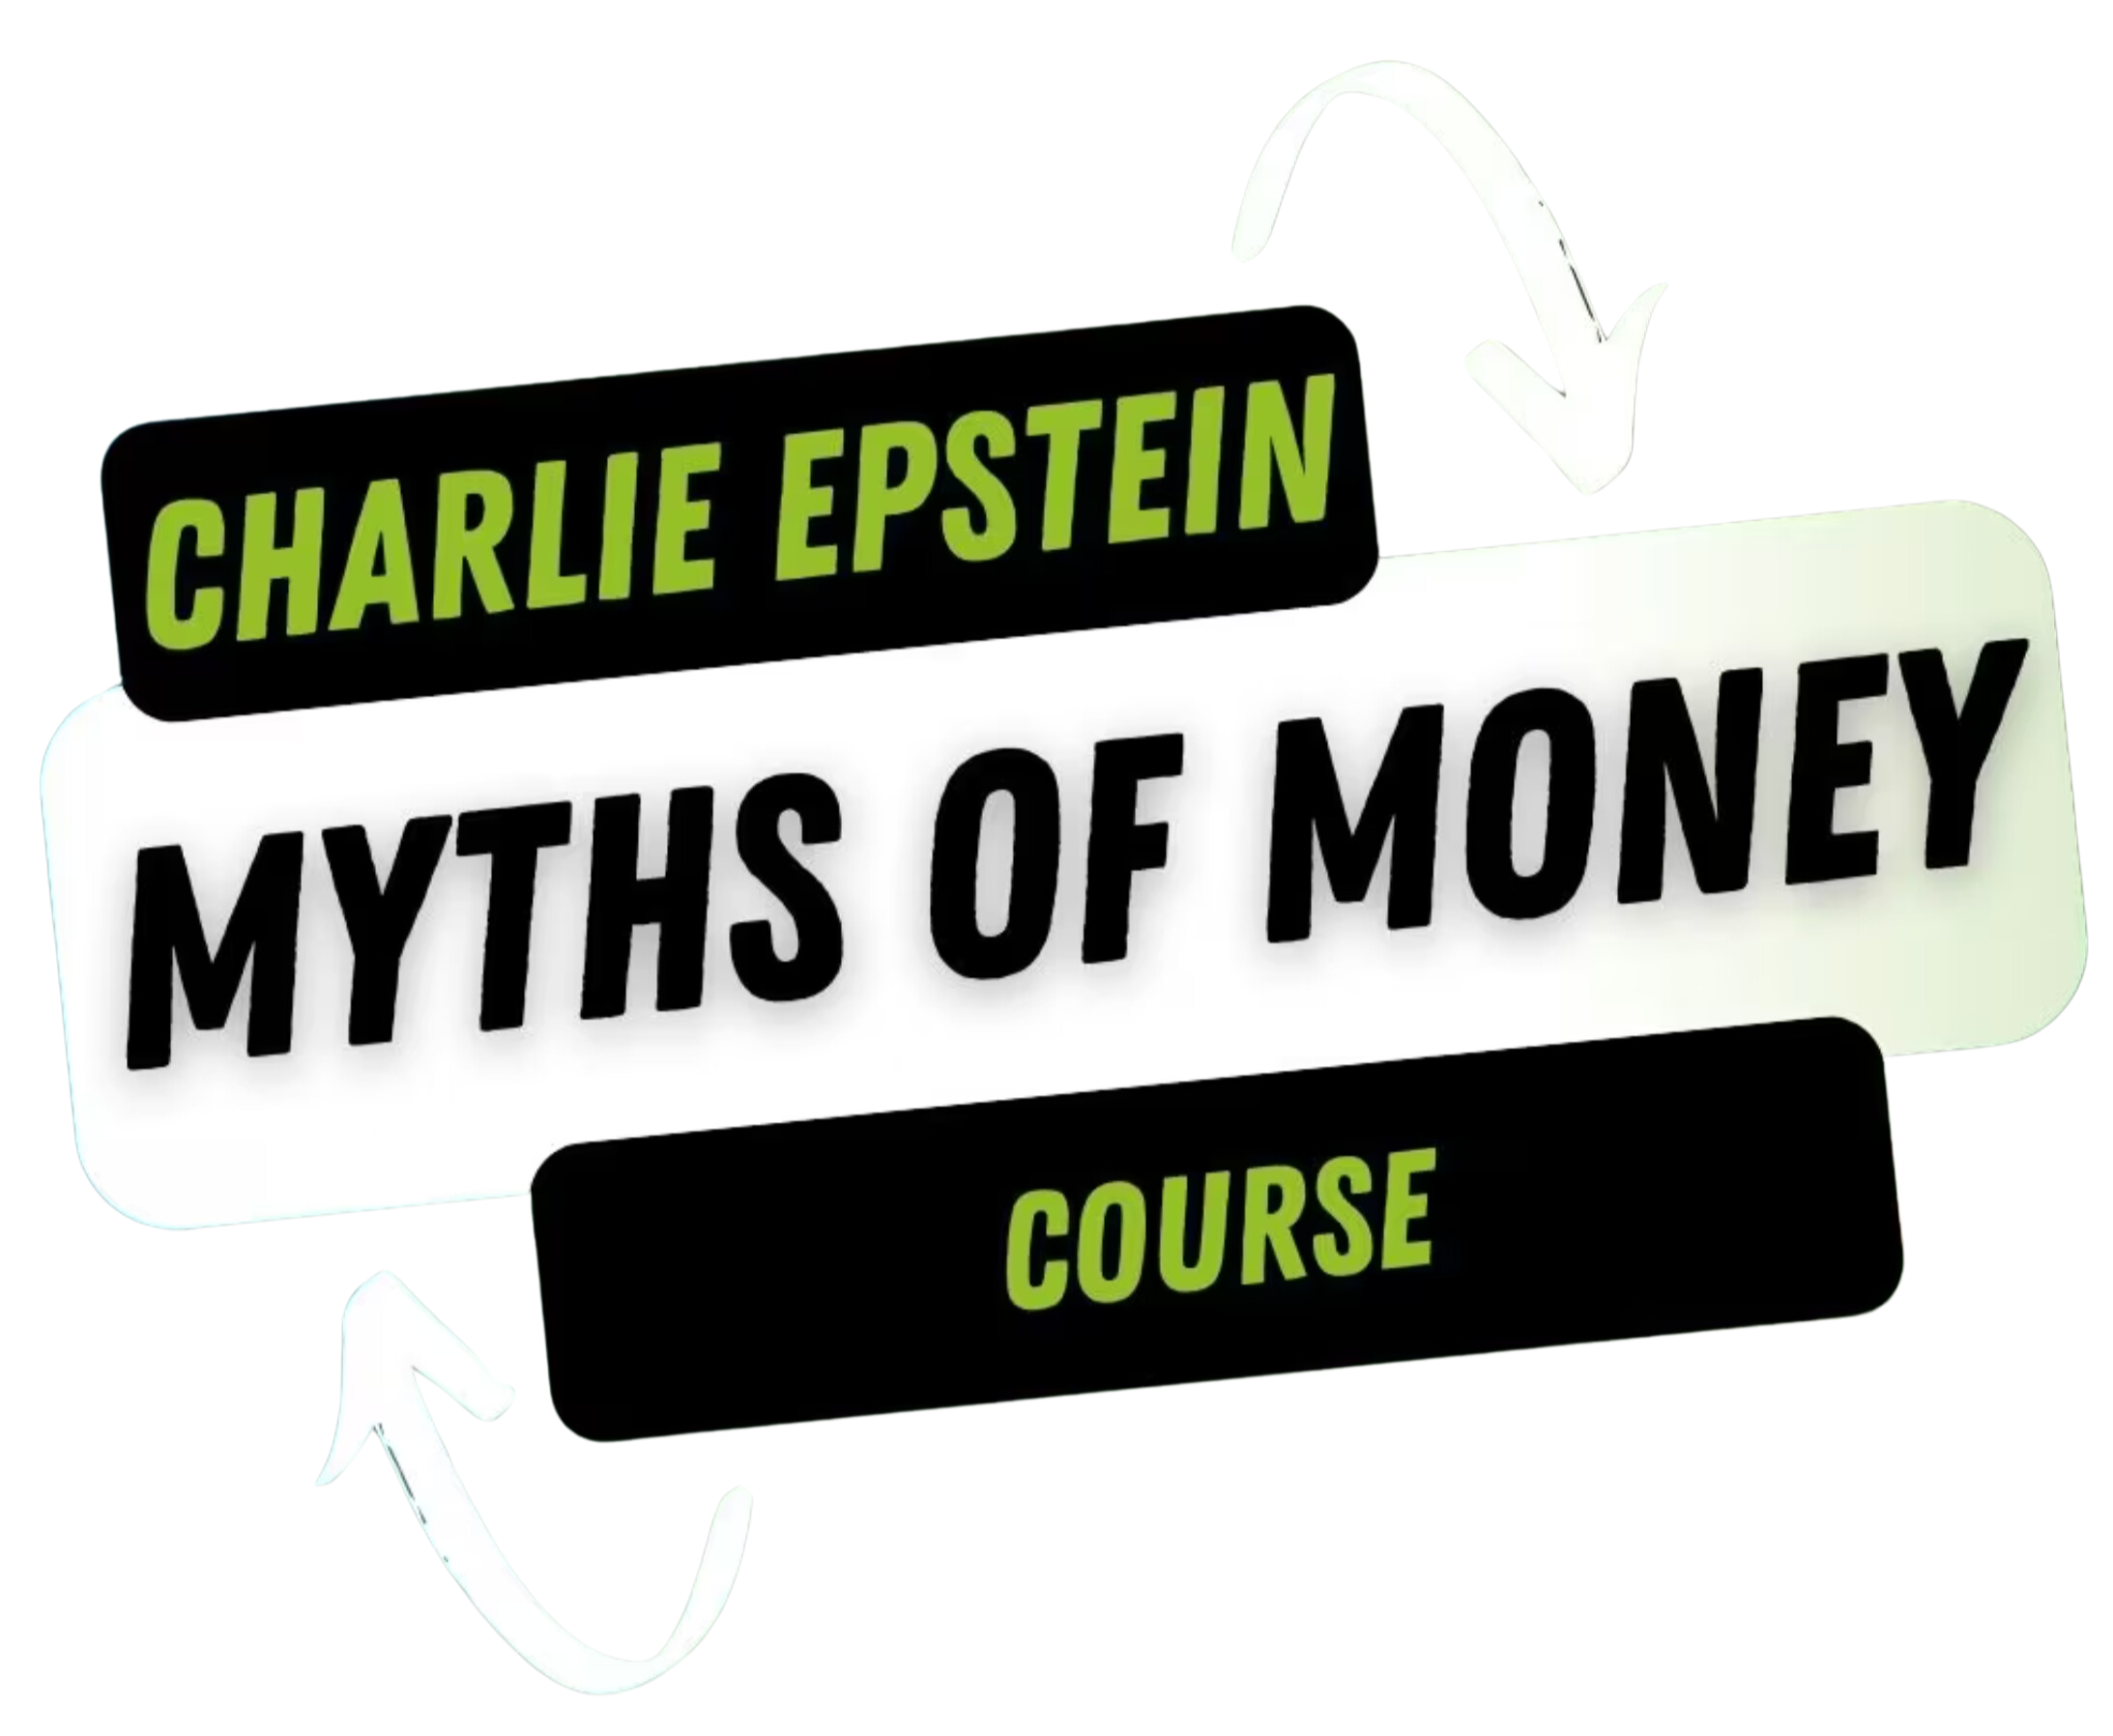 Charlie Epstein Myths of Money Course